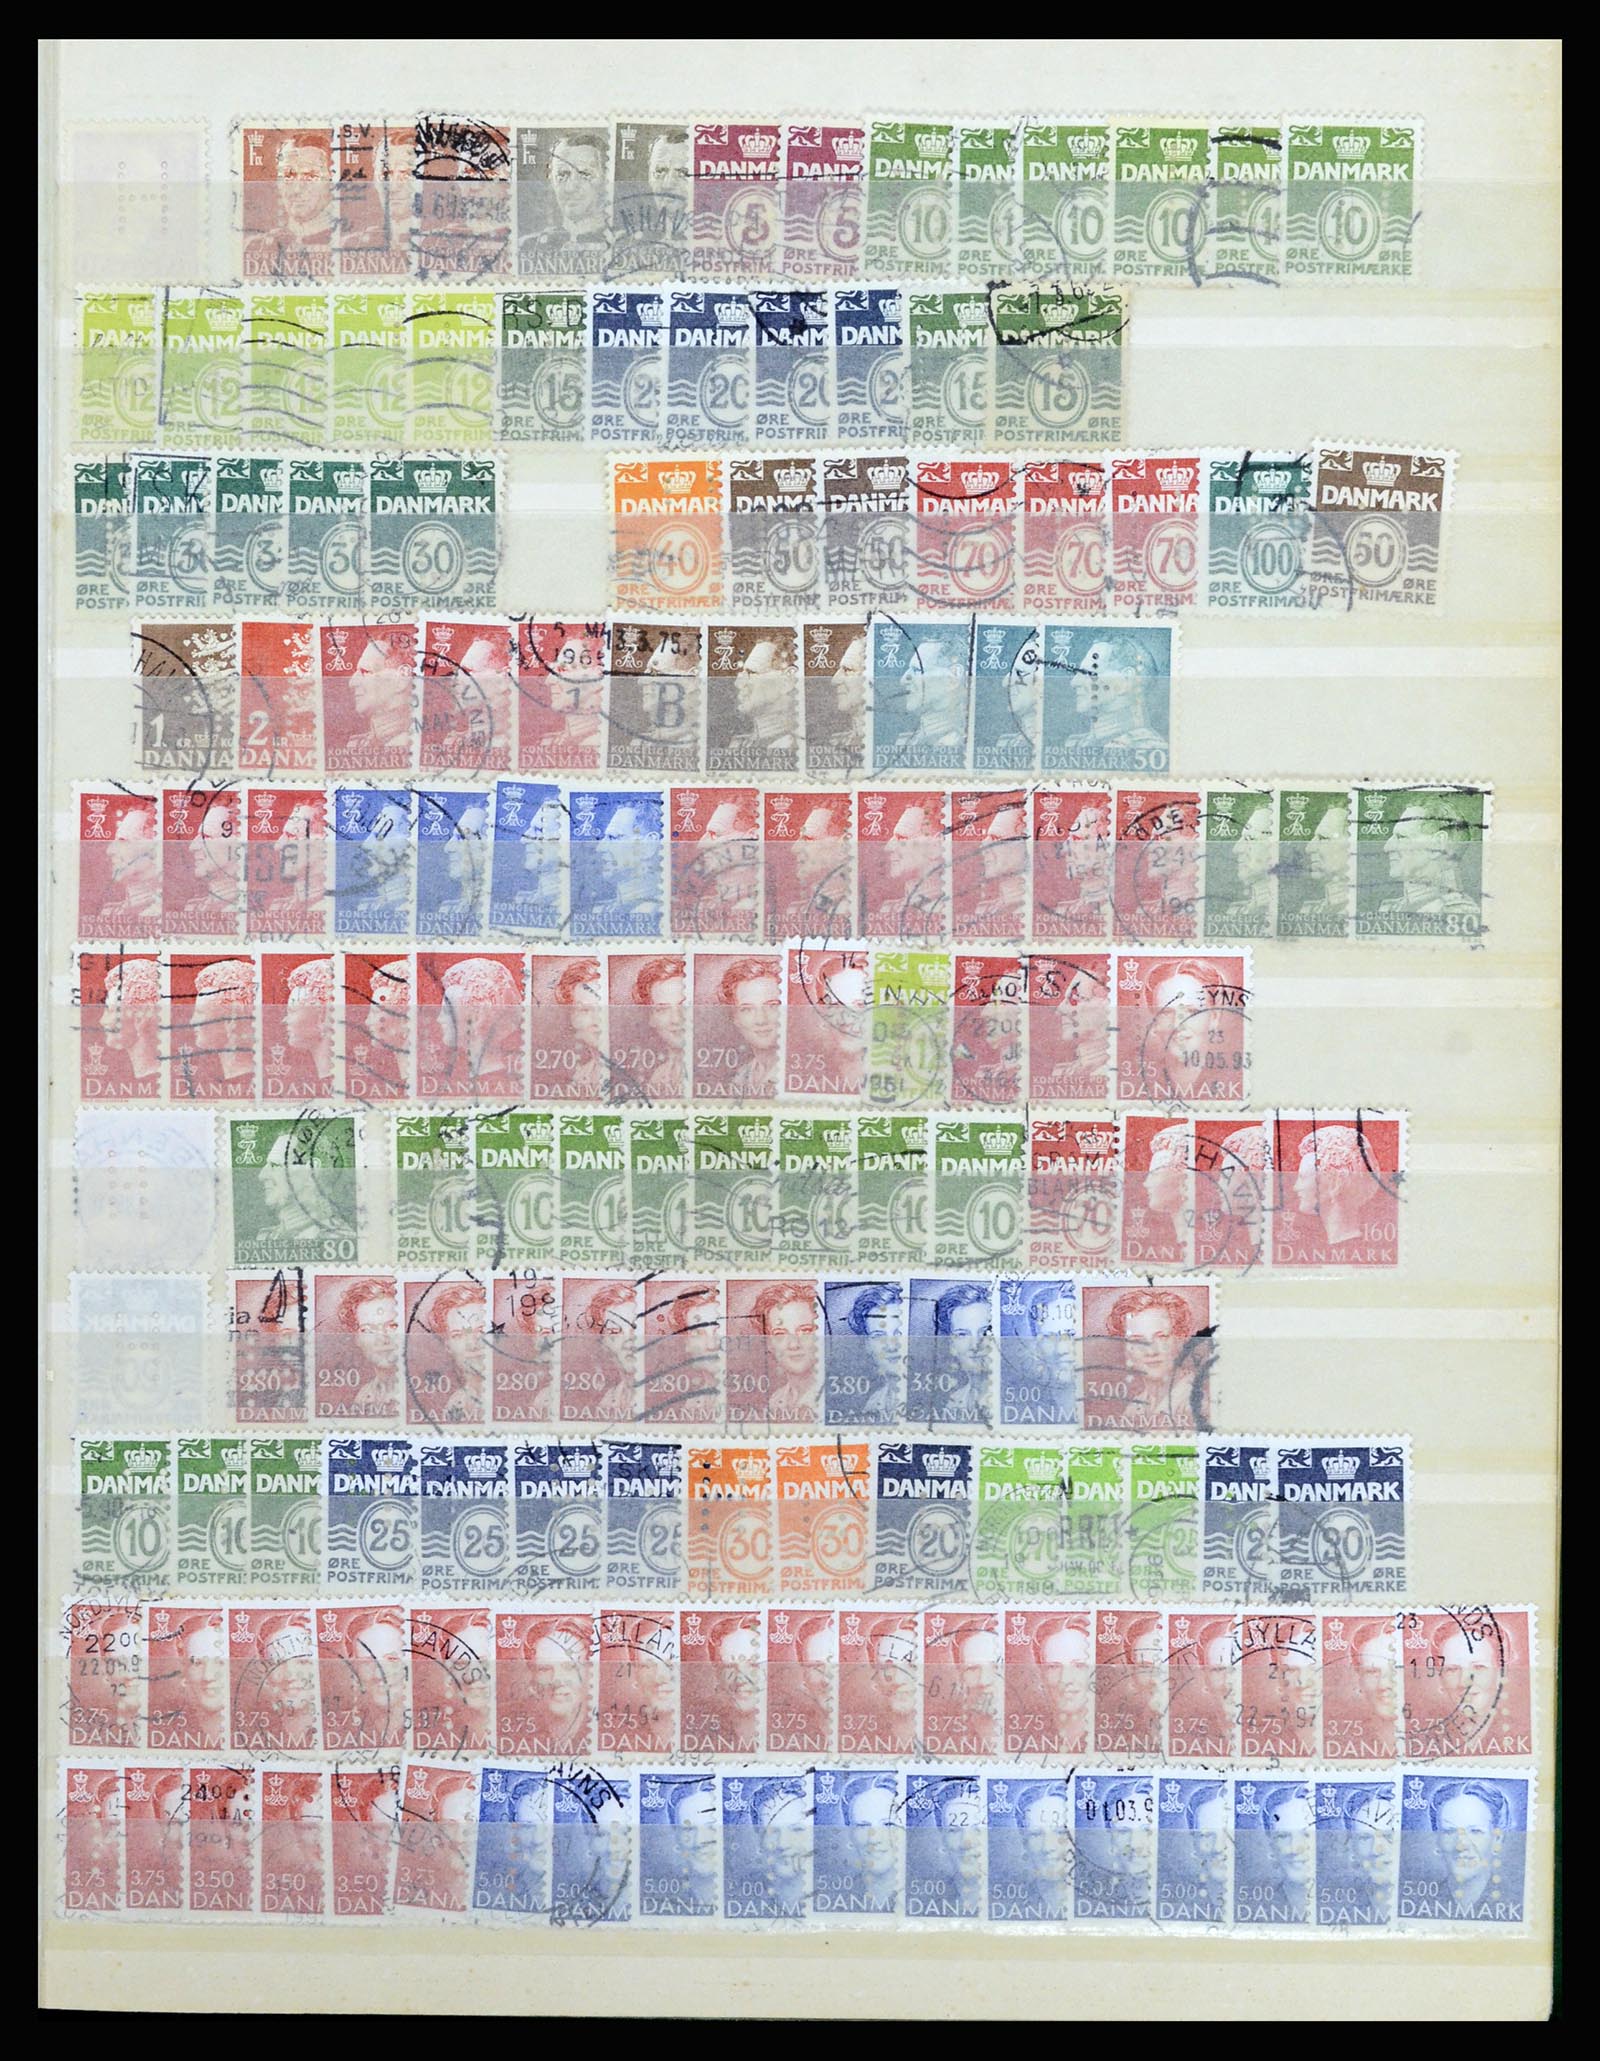 37056 075 - Stamp collection 37056 Denmark perfins.